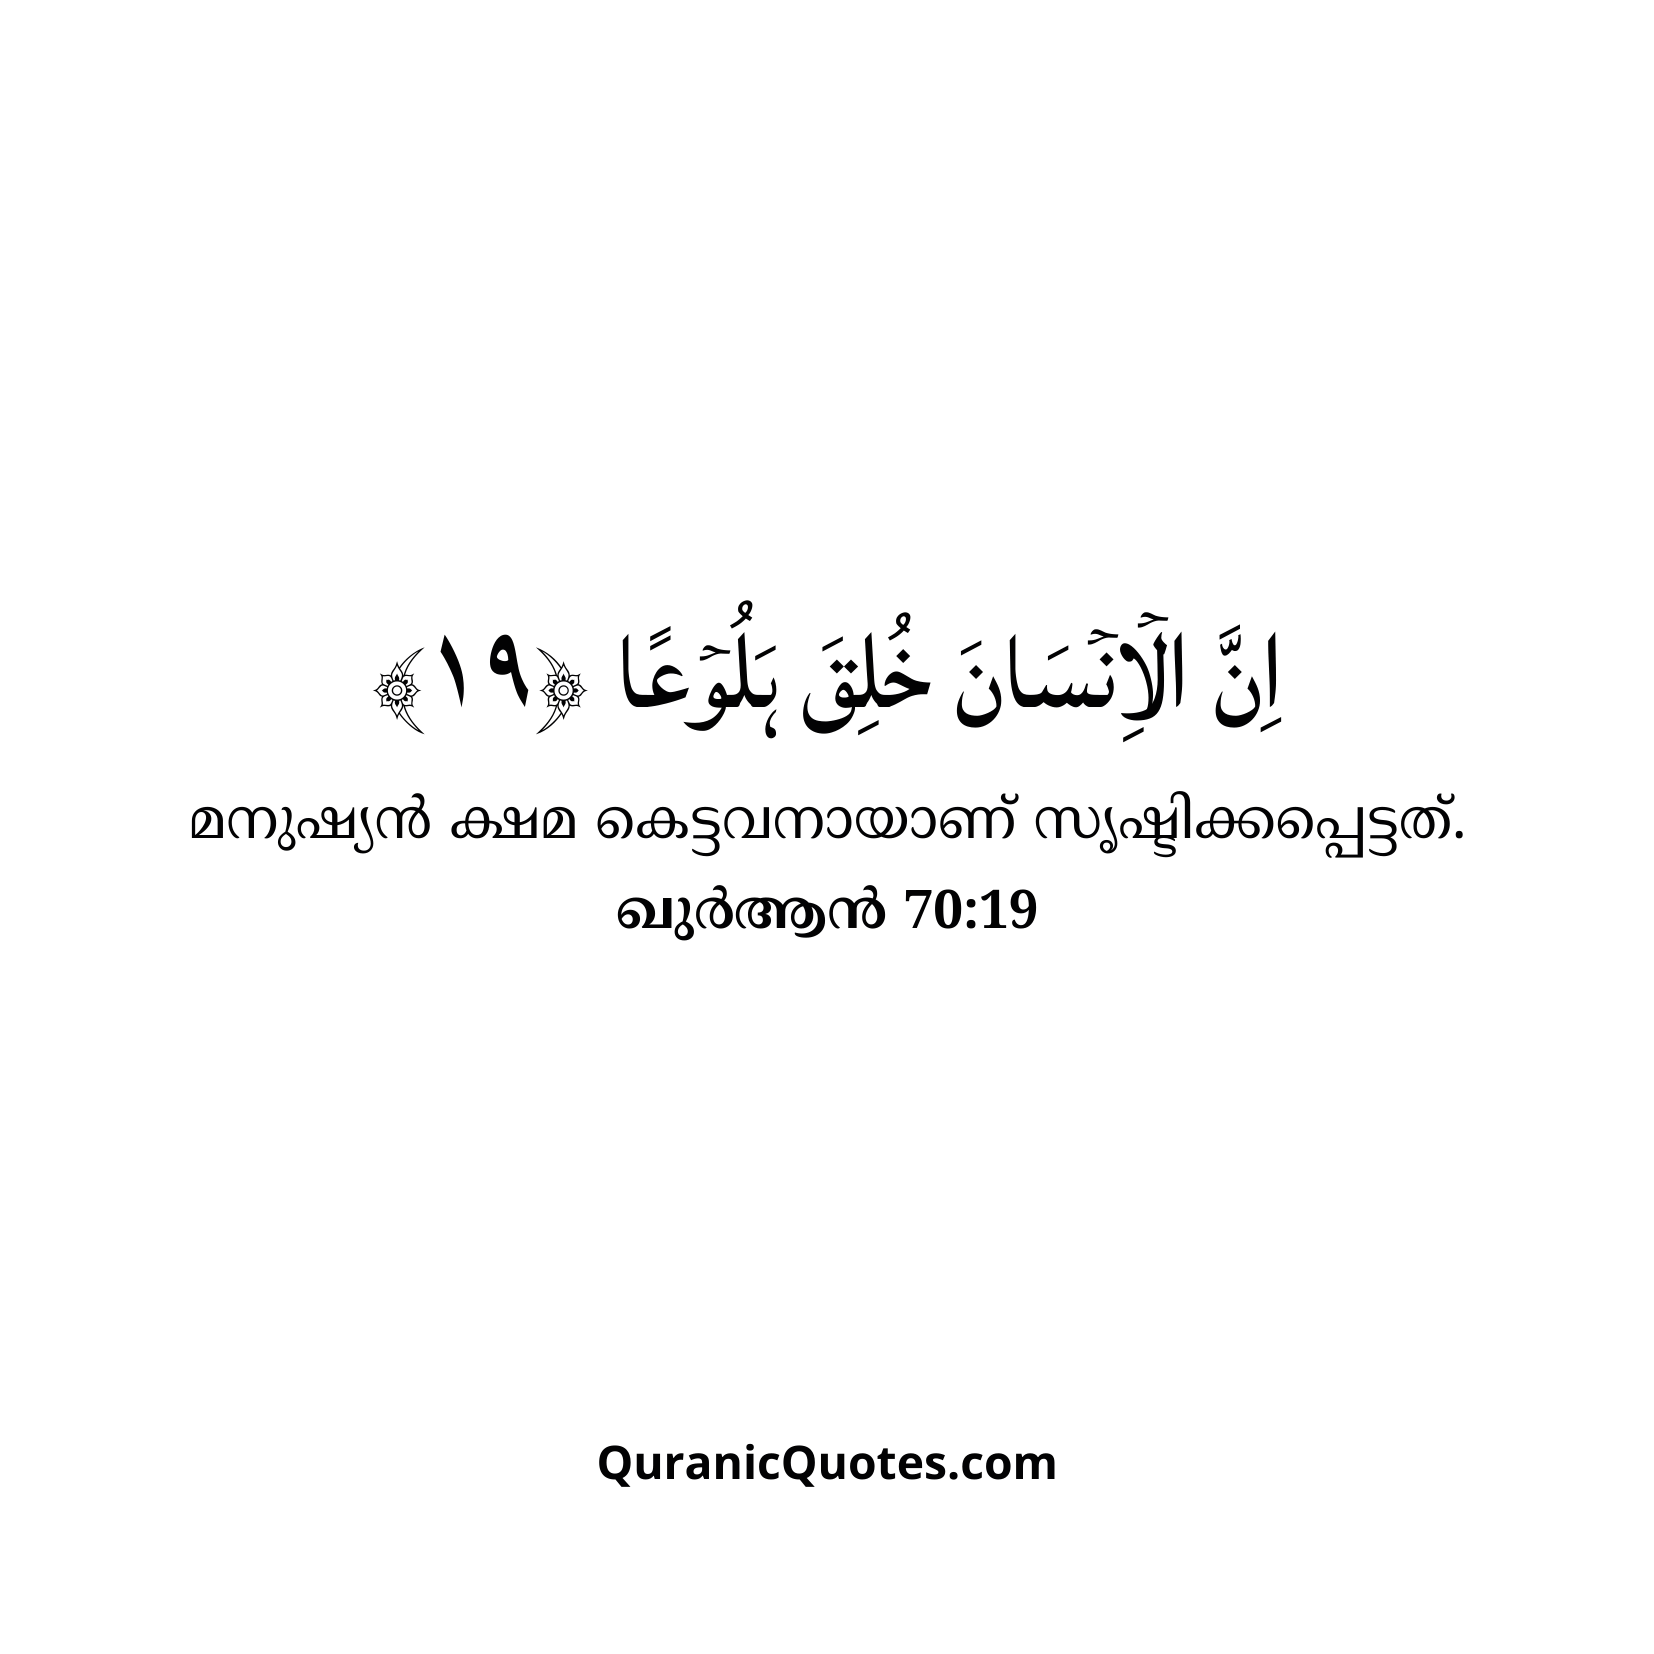 Quranic Quotes in Malayalam 70:19